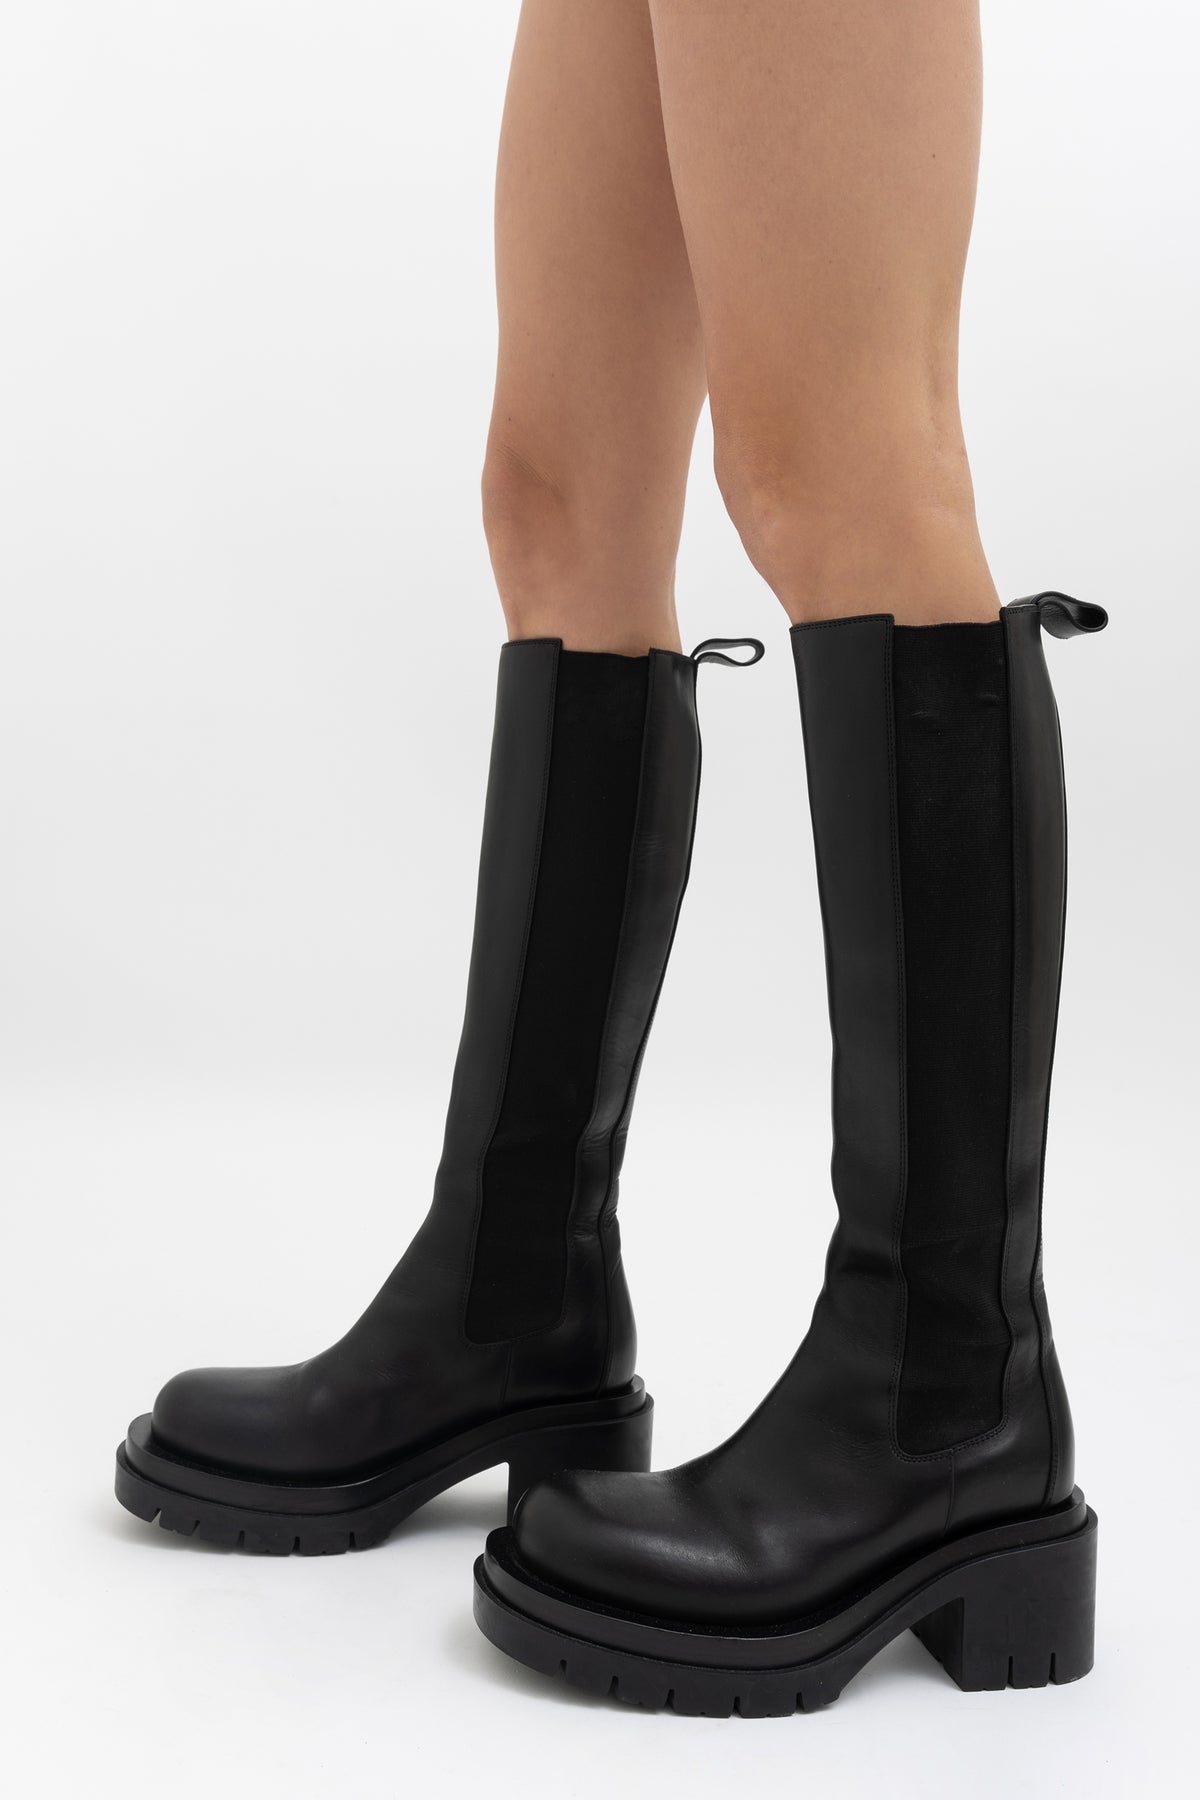 bottega-veneta-black-leather-lug-chelsea-boots-385-da34